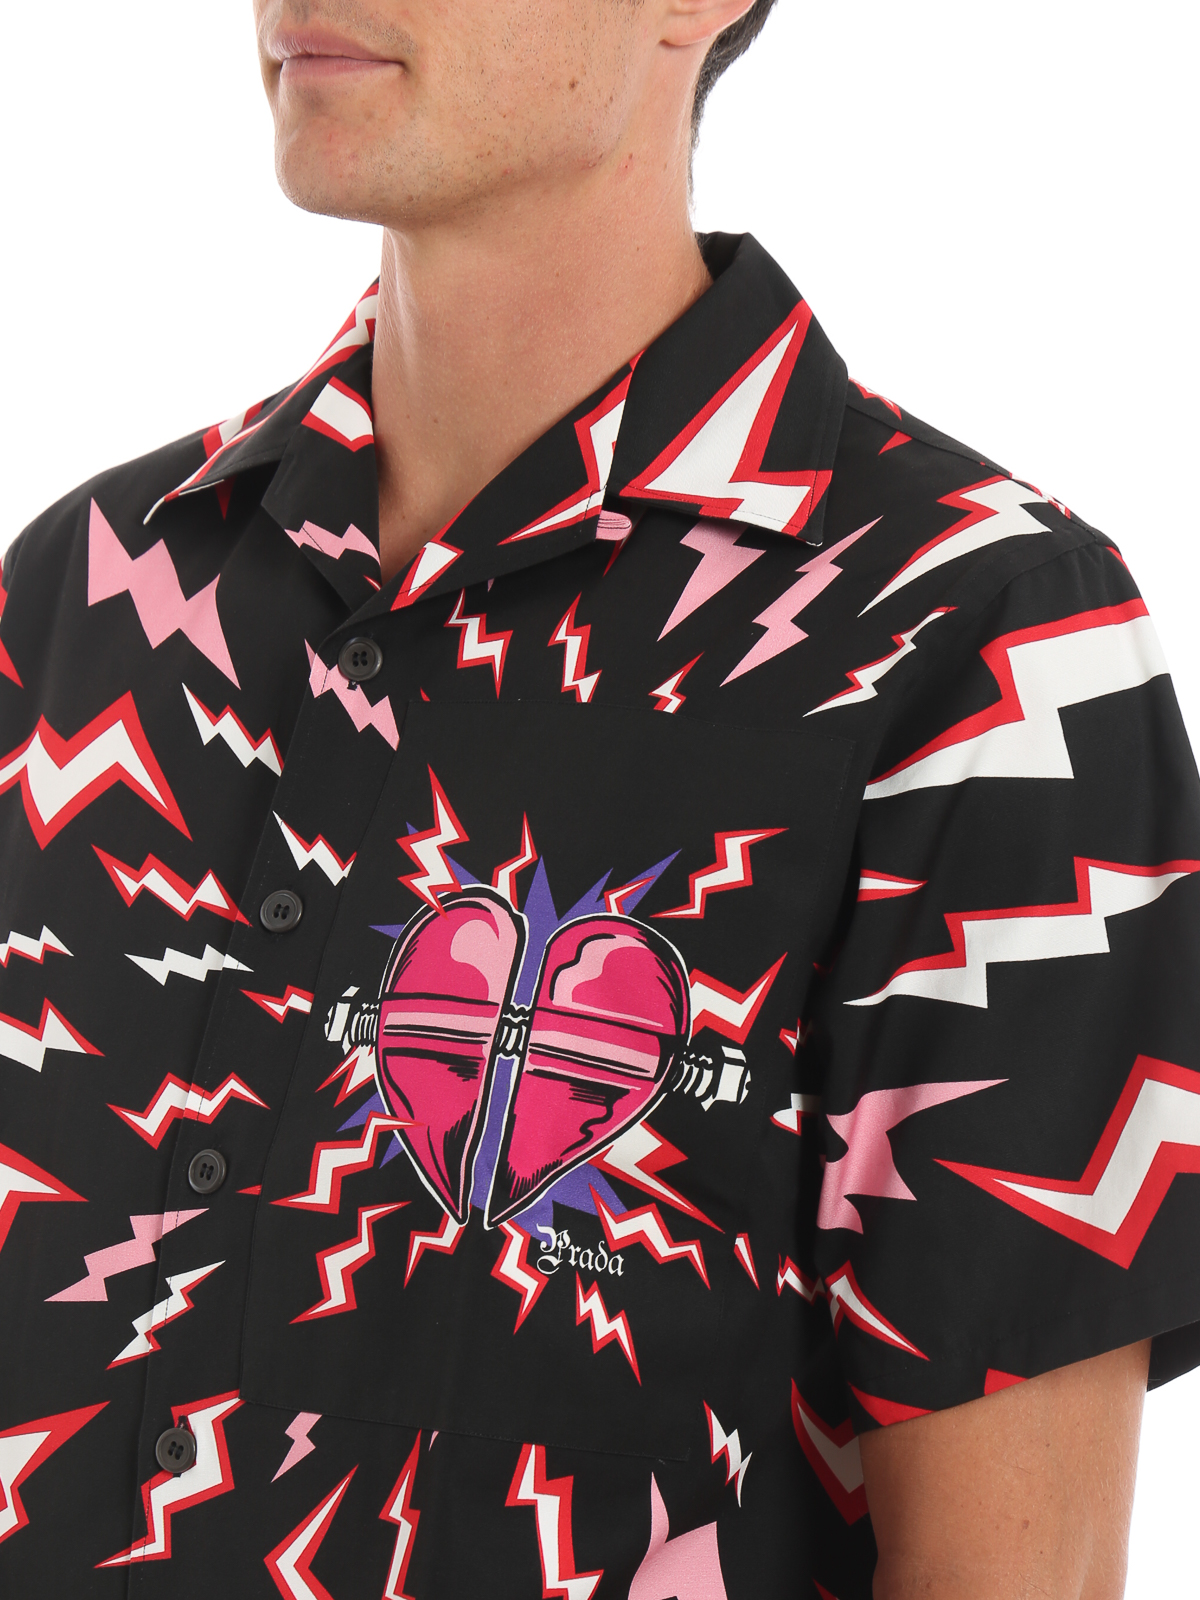 Prada Multicolor Printed Cotton Short Sleeve Bowling Shirt L Prada